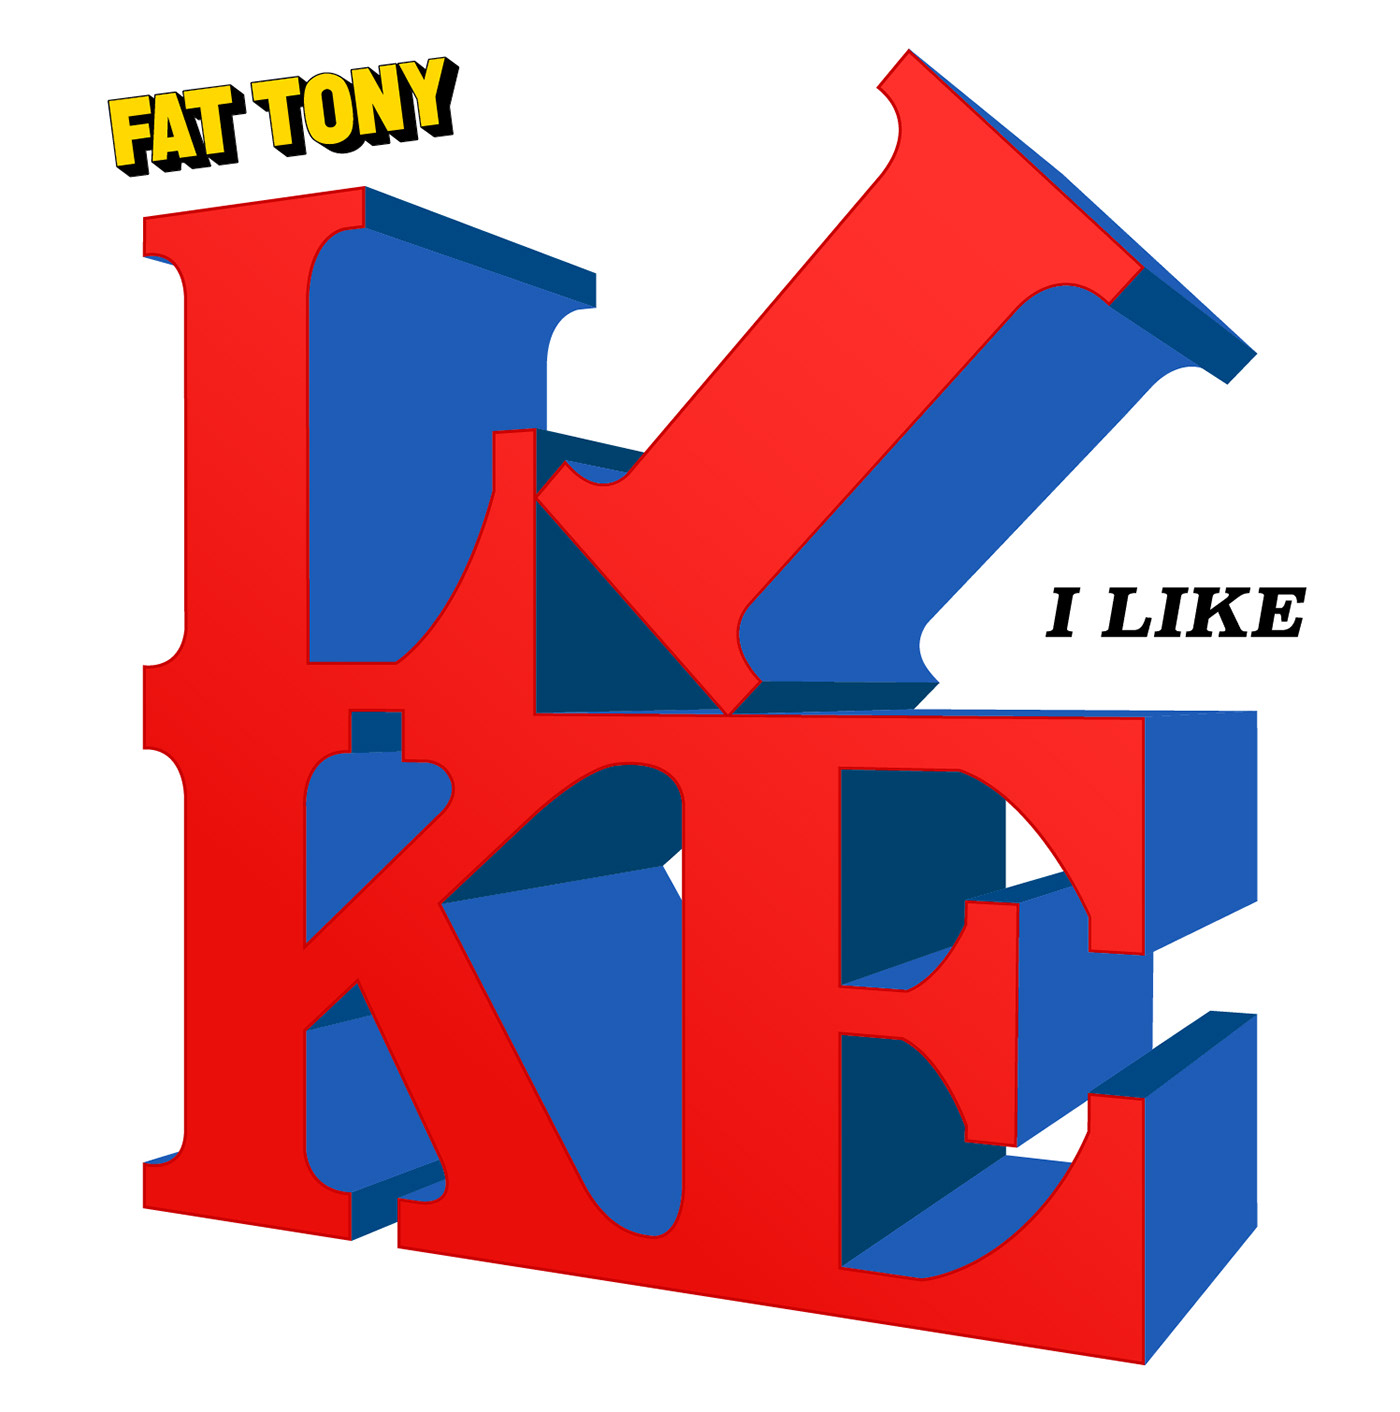 Fat Tony Illustrator 3D music artwork artist Style Primary colors rap Robert Indiana